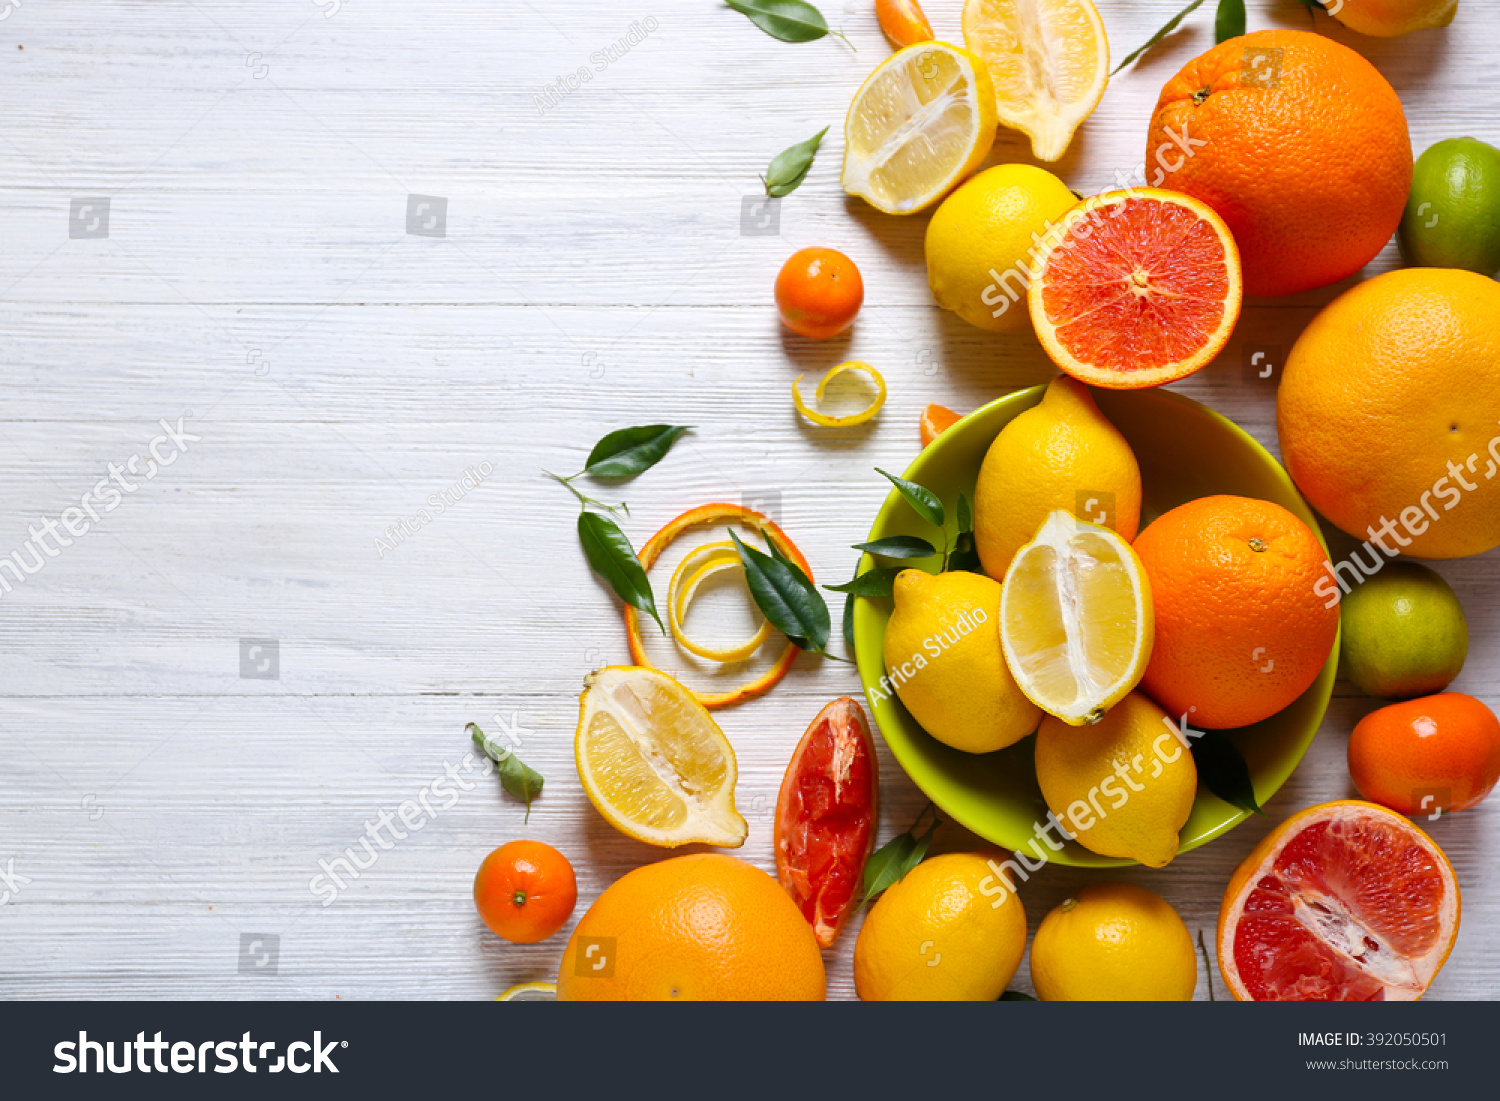 powerpoint-template-various-citrus-fruits-on-wooden-kujhmhmhi